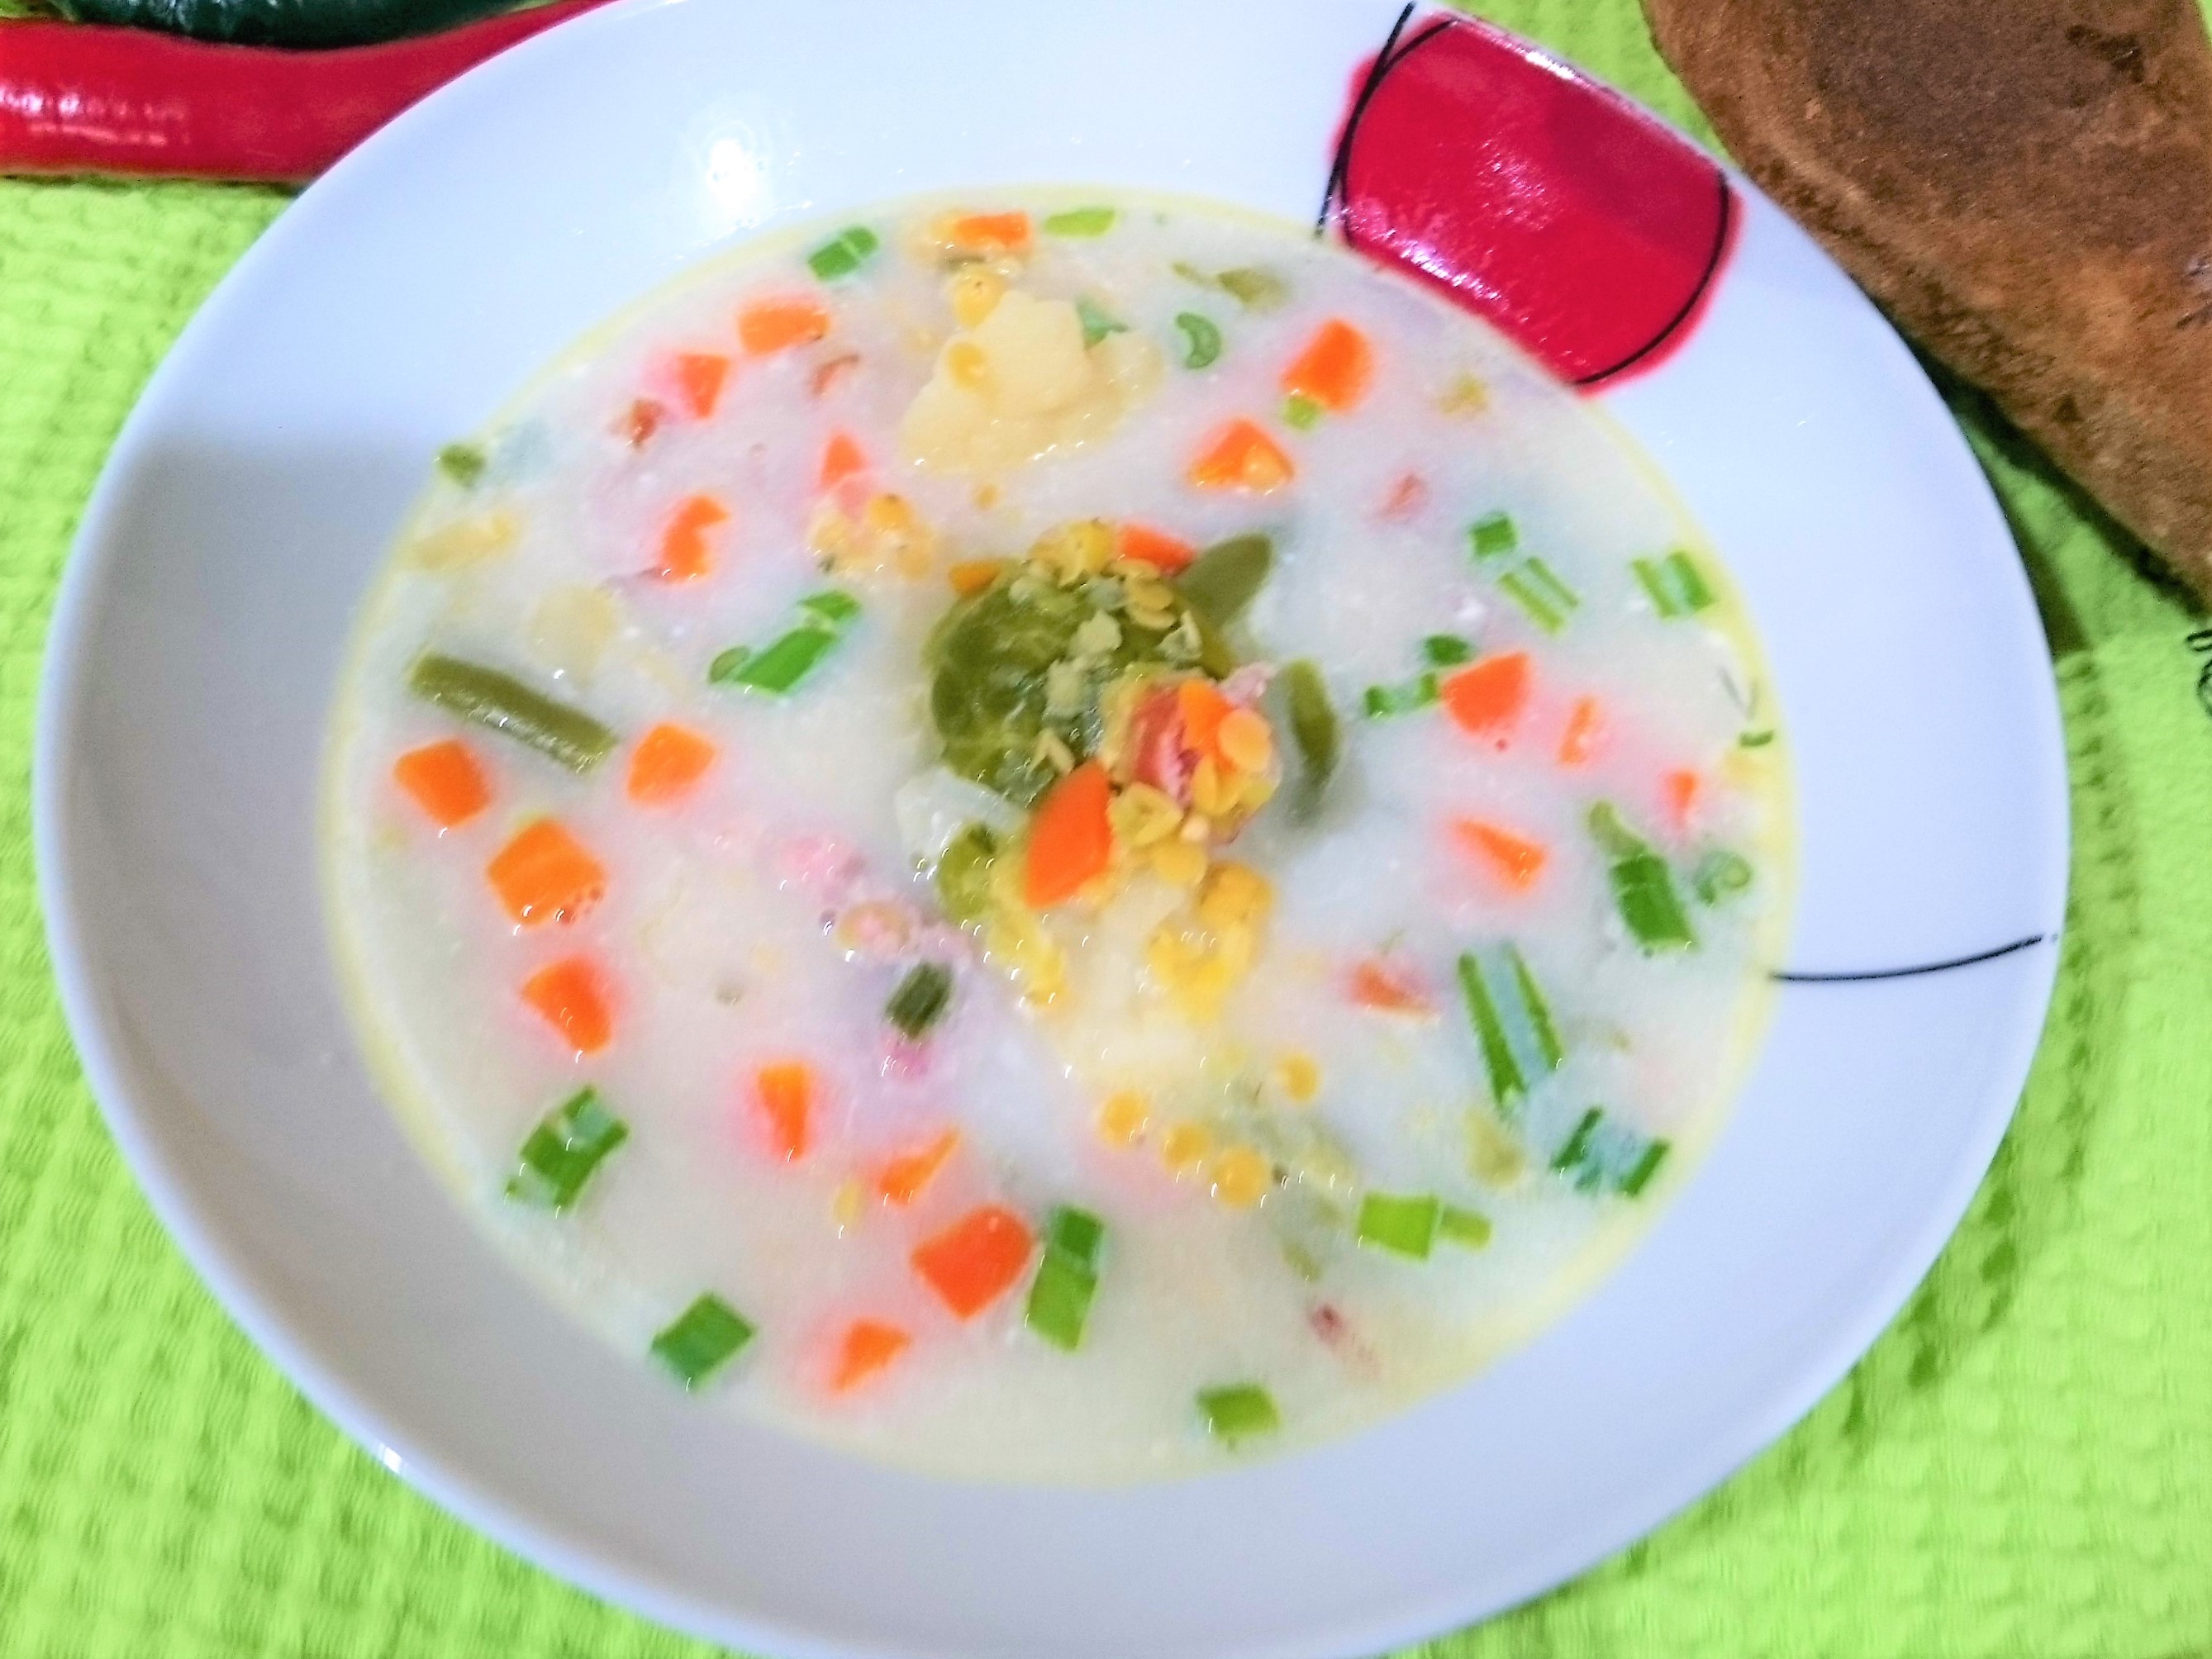 Supa cu legume verzi, linte si iaurt